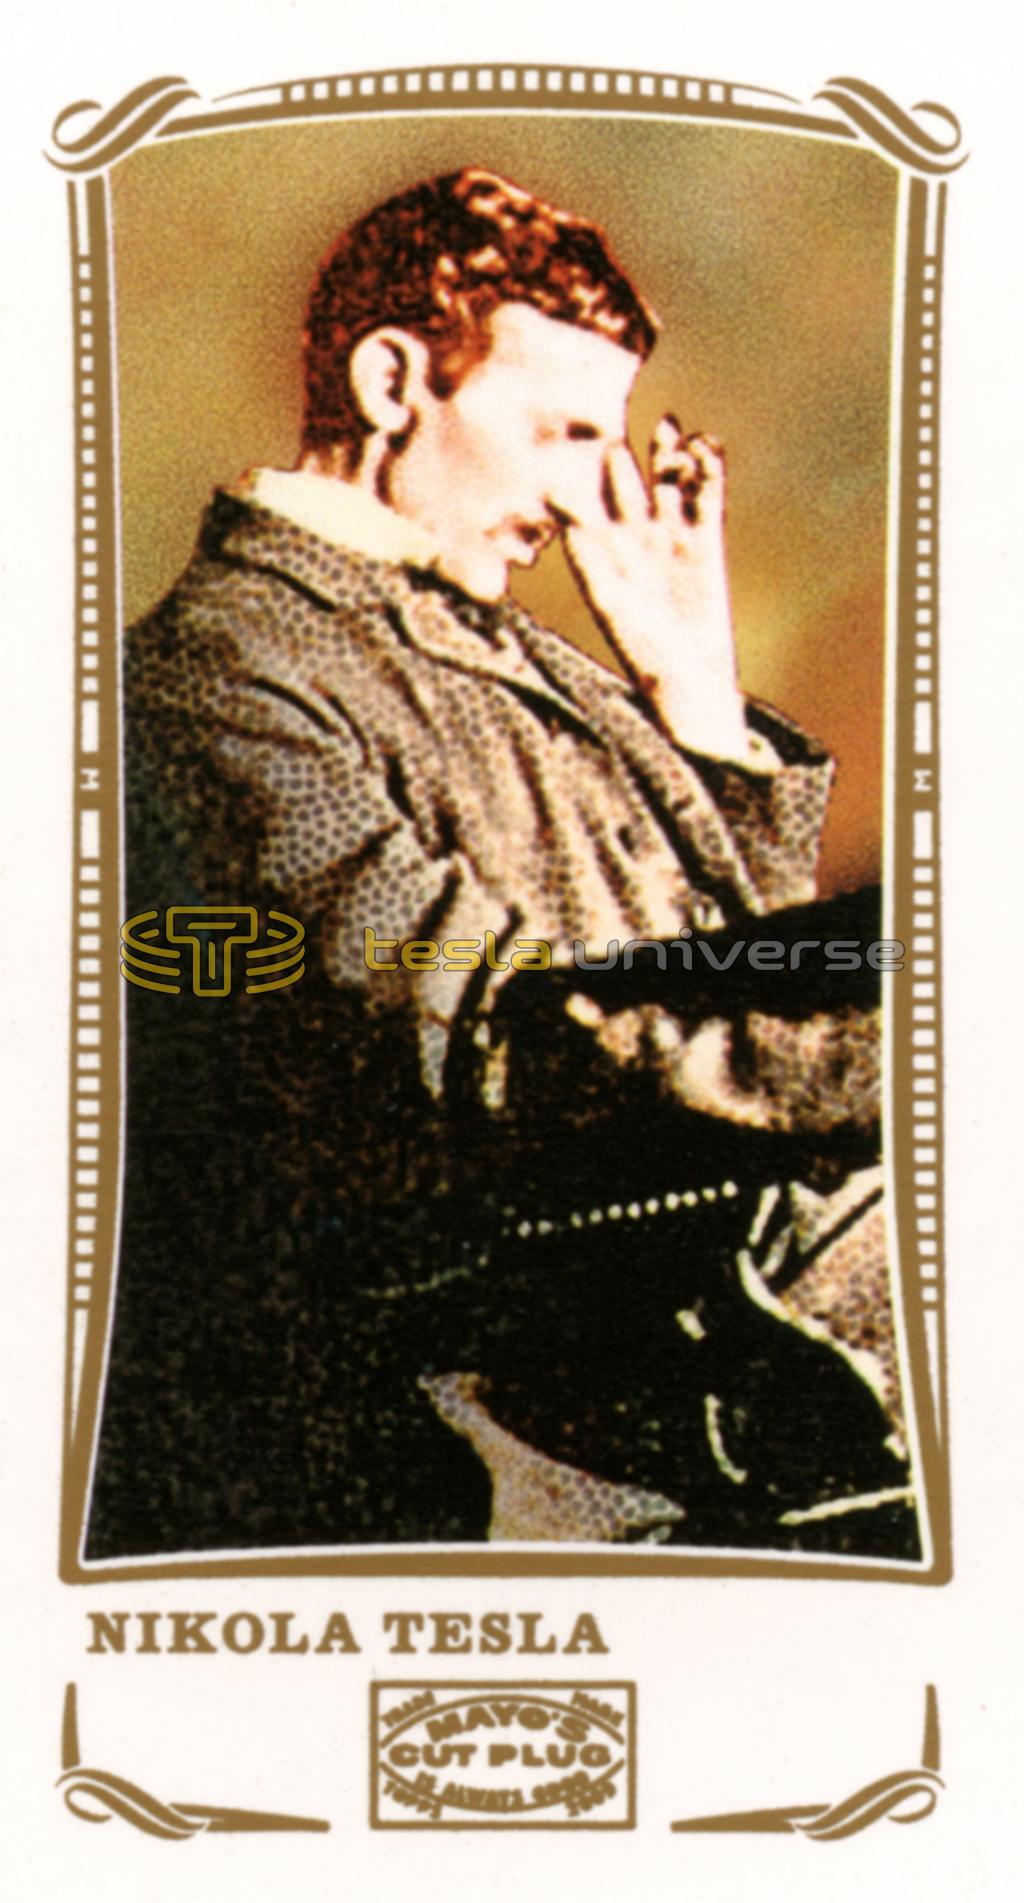 Topps World's Fair card featuring Nikola Tesla